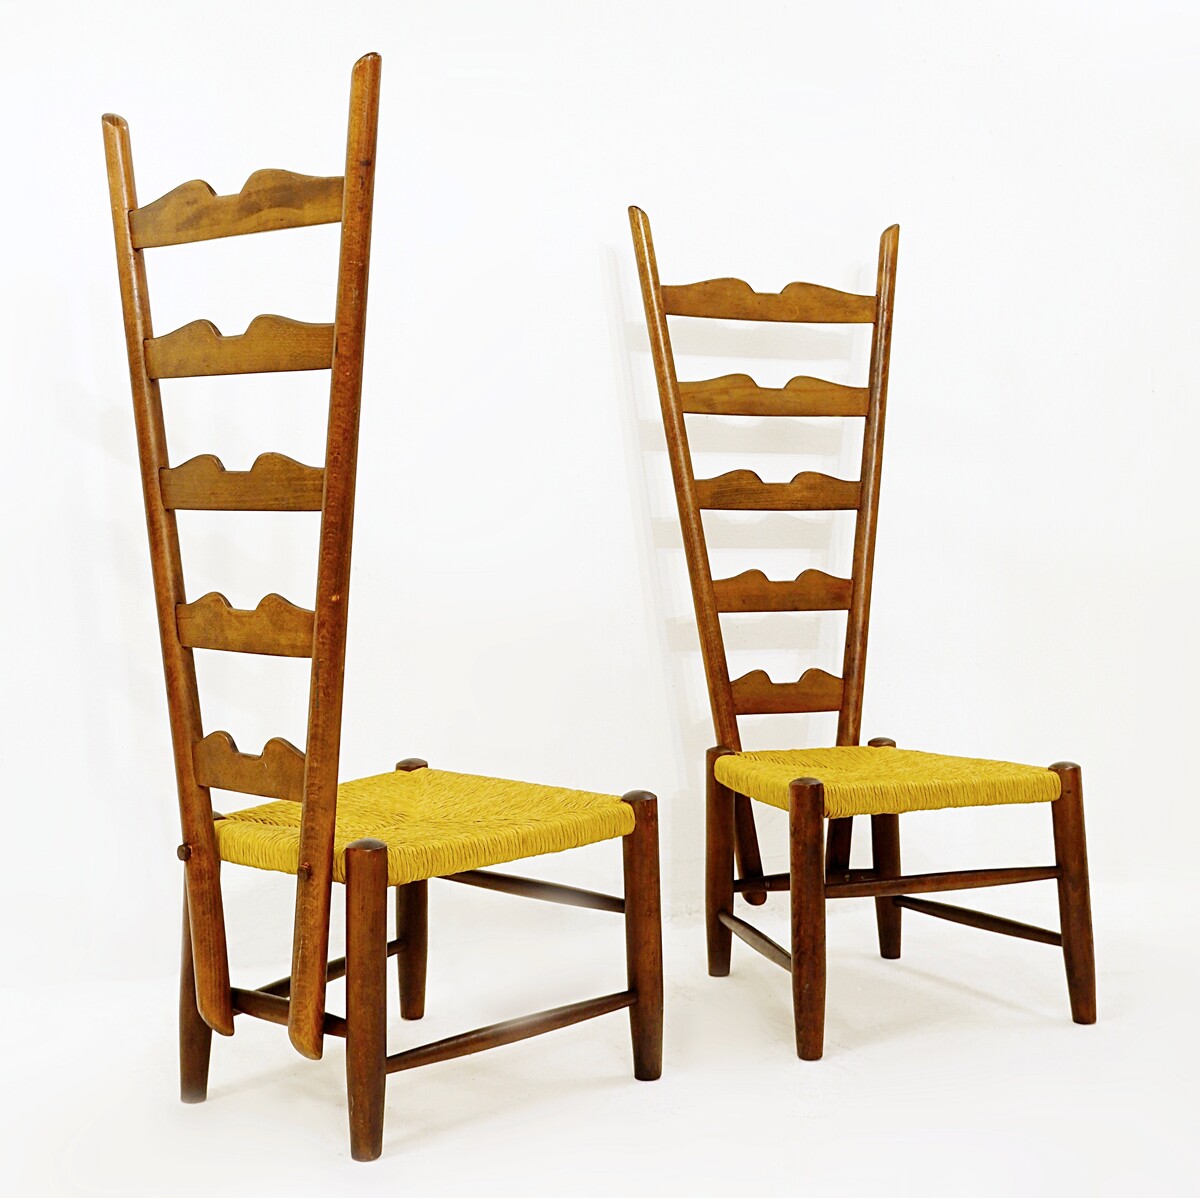 pair-of-chairs-by-gio-ponti-for-casa-e-giardino-milan-italy-circa-1939-5018400-en-max.jpg